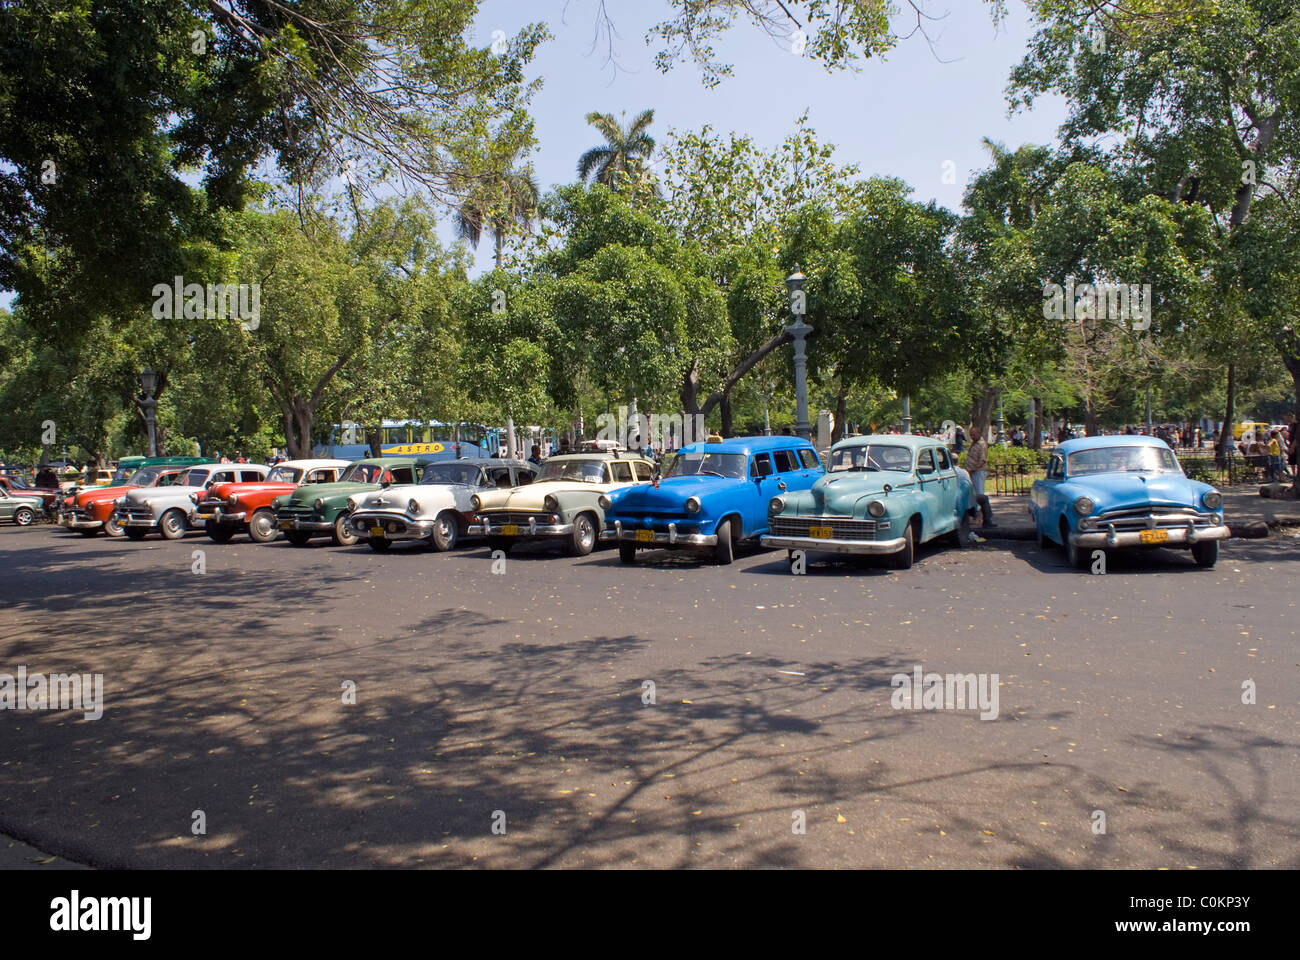 classic American cars at Old Havana, Cuba. Stock Photo